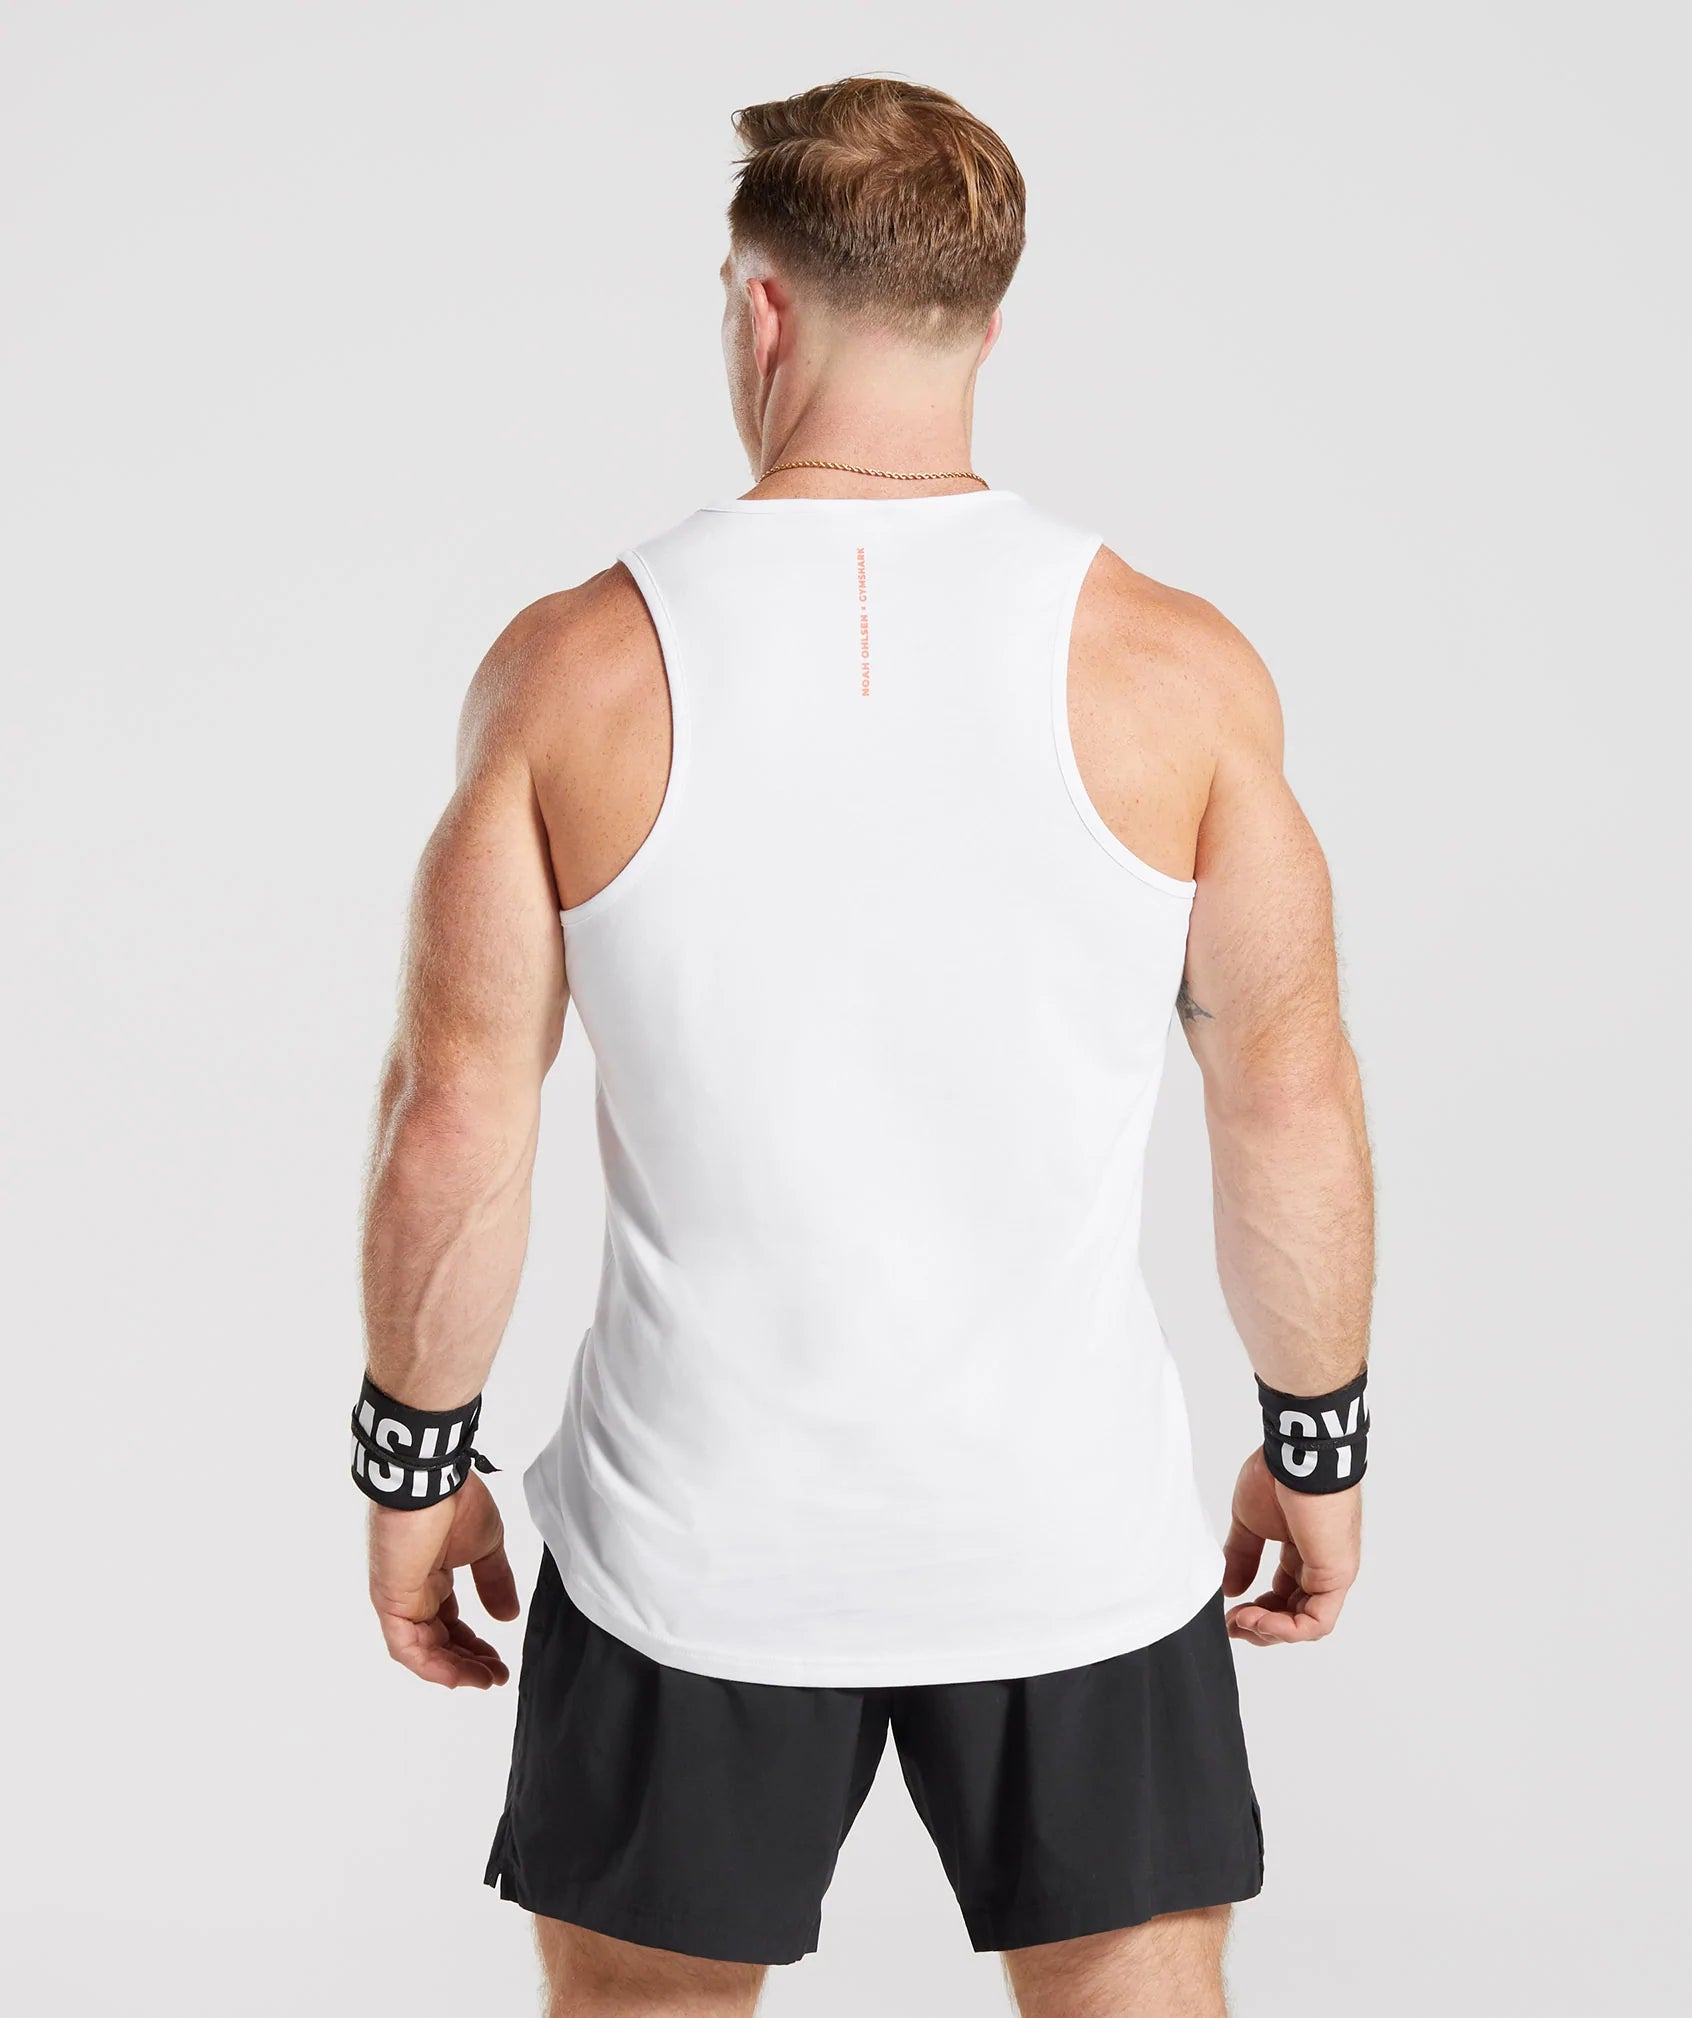 Camisetas para hombres Tank Tougs Fashion Gym Gym Cody Maneveless Shirts  Marca Top Fitness Camiseta casual Camisa de entrenamiento Campo de